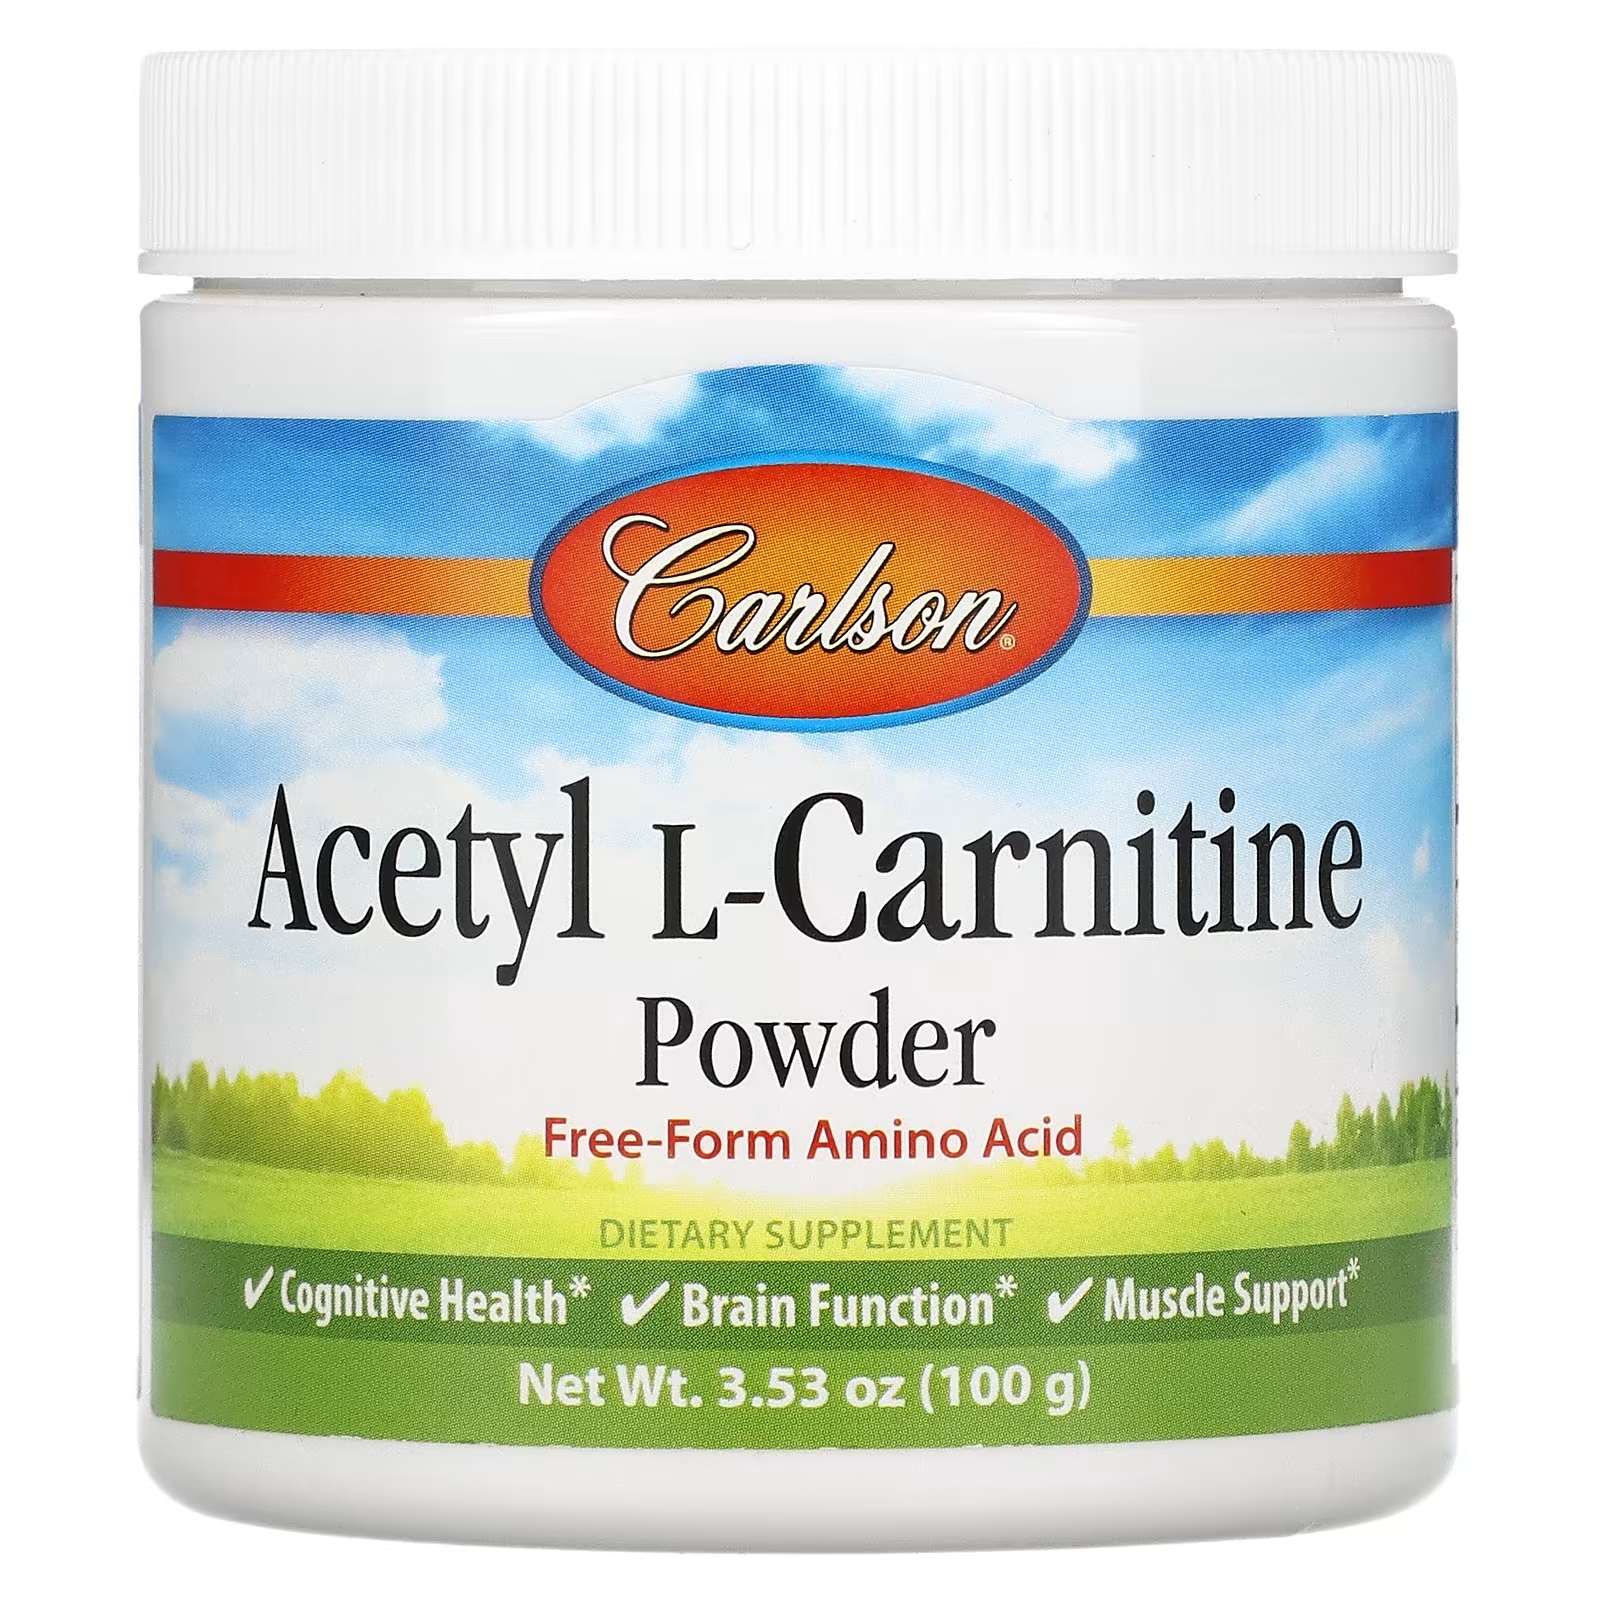 Ацетил-L-карнитин Carlson порошок аминокислоты, 100 г